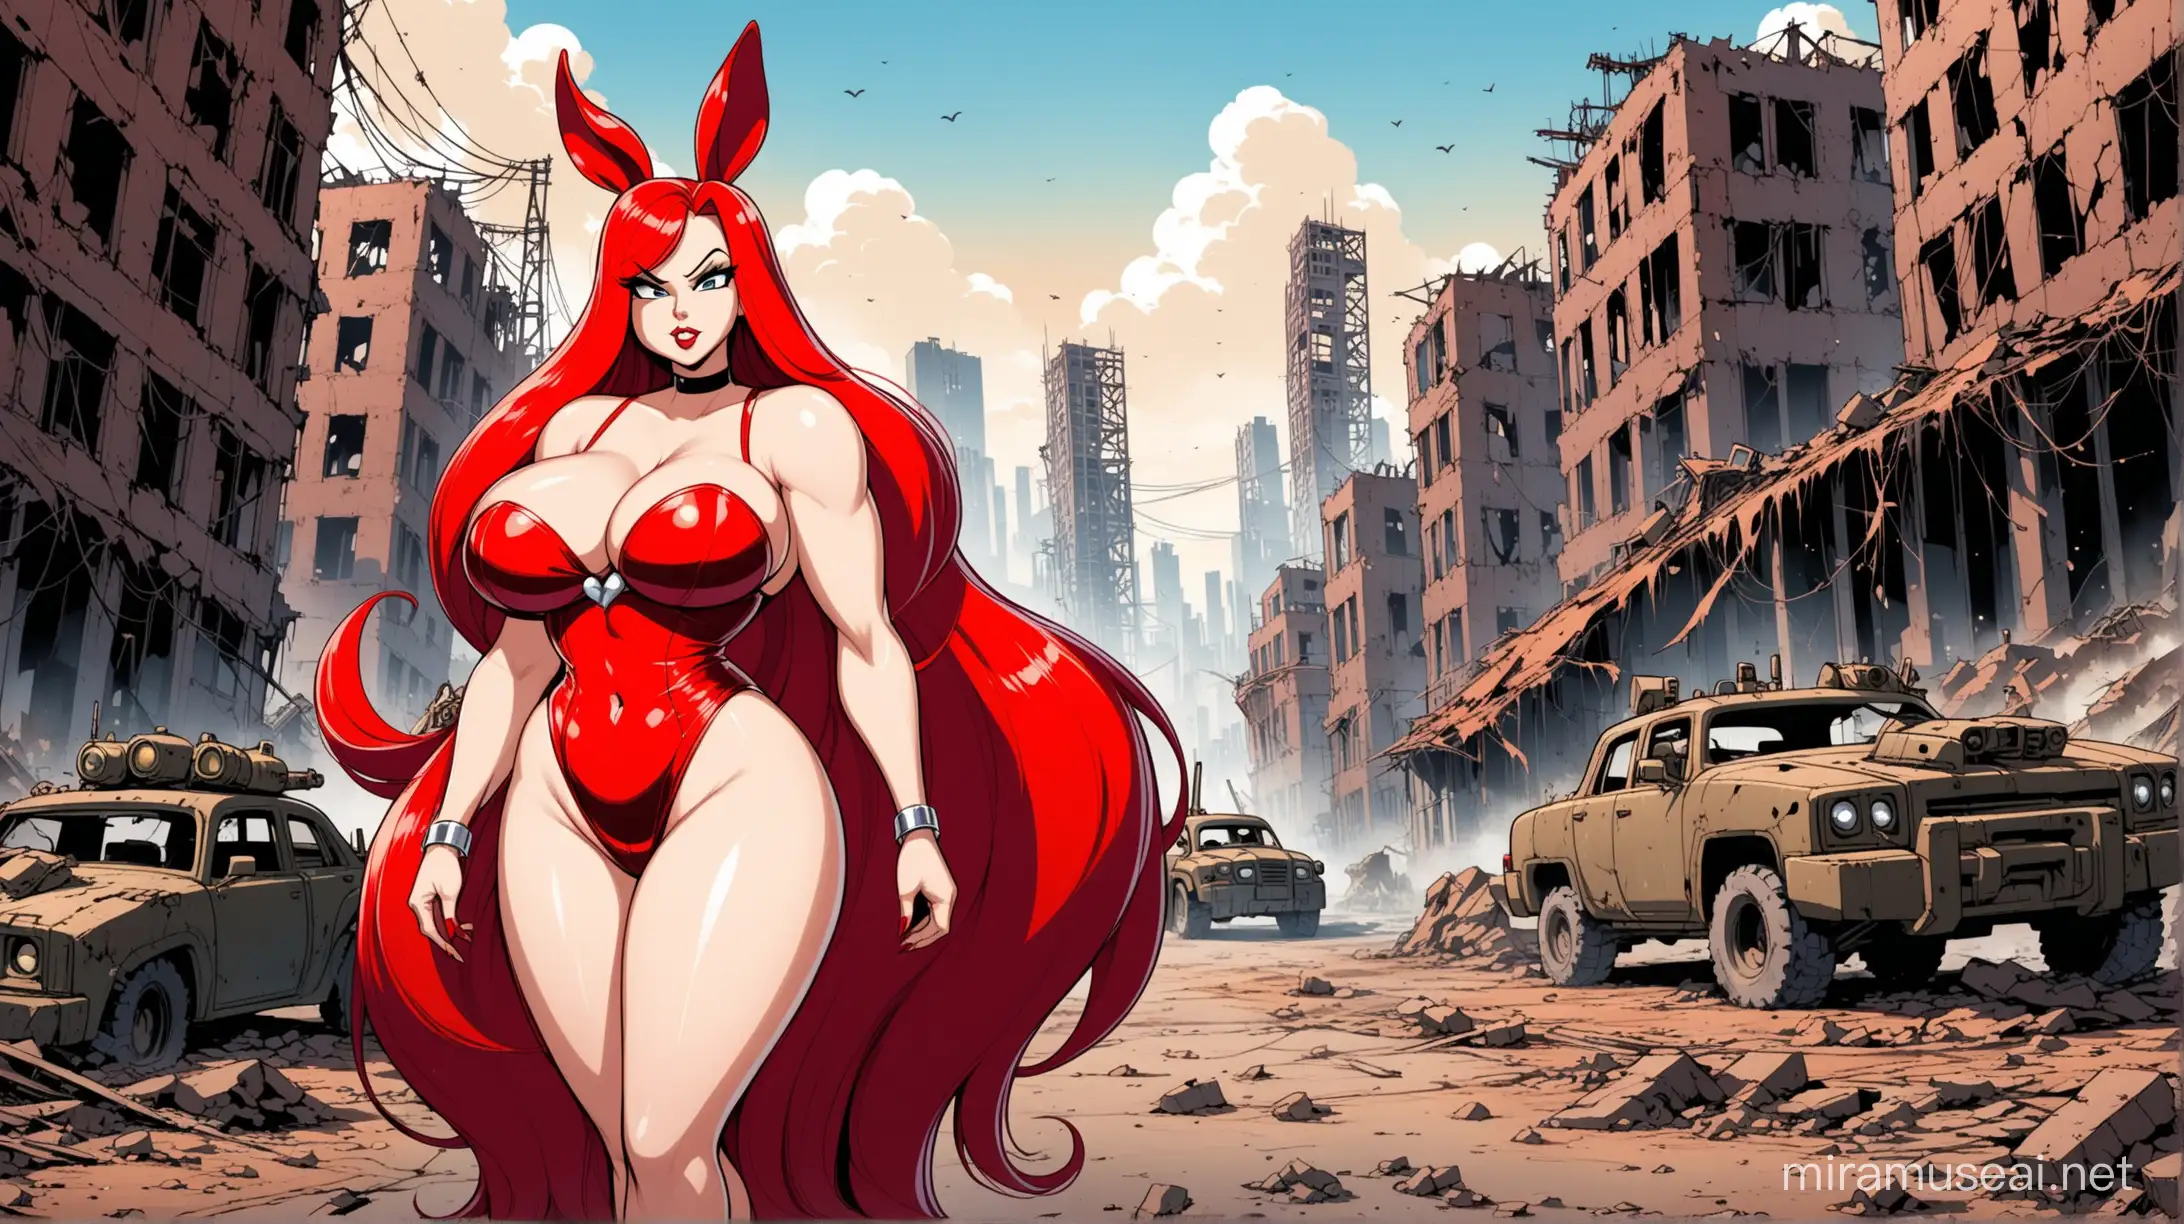 Cartoon Warrior Jessica Rabbit in Battle Armor Amidst Ruins